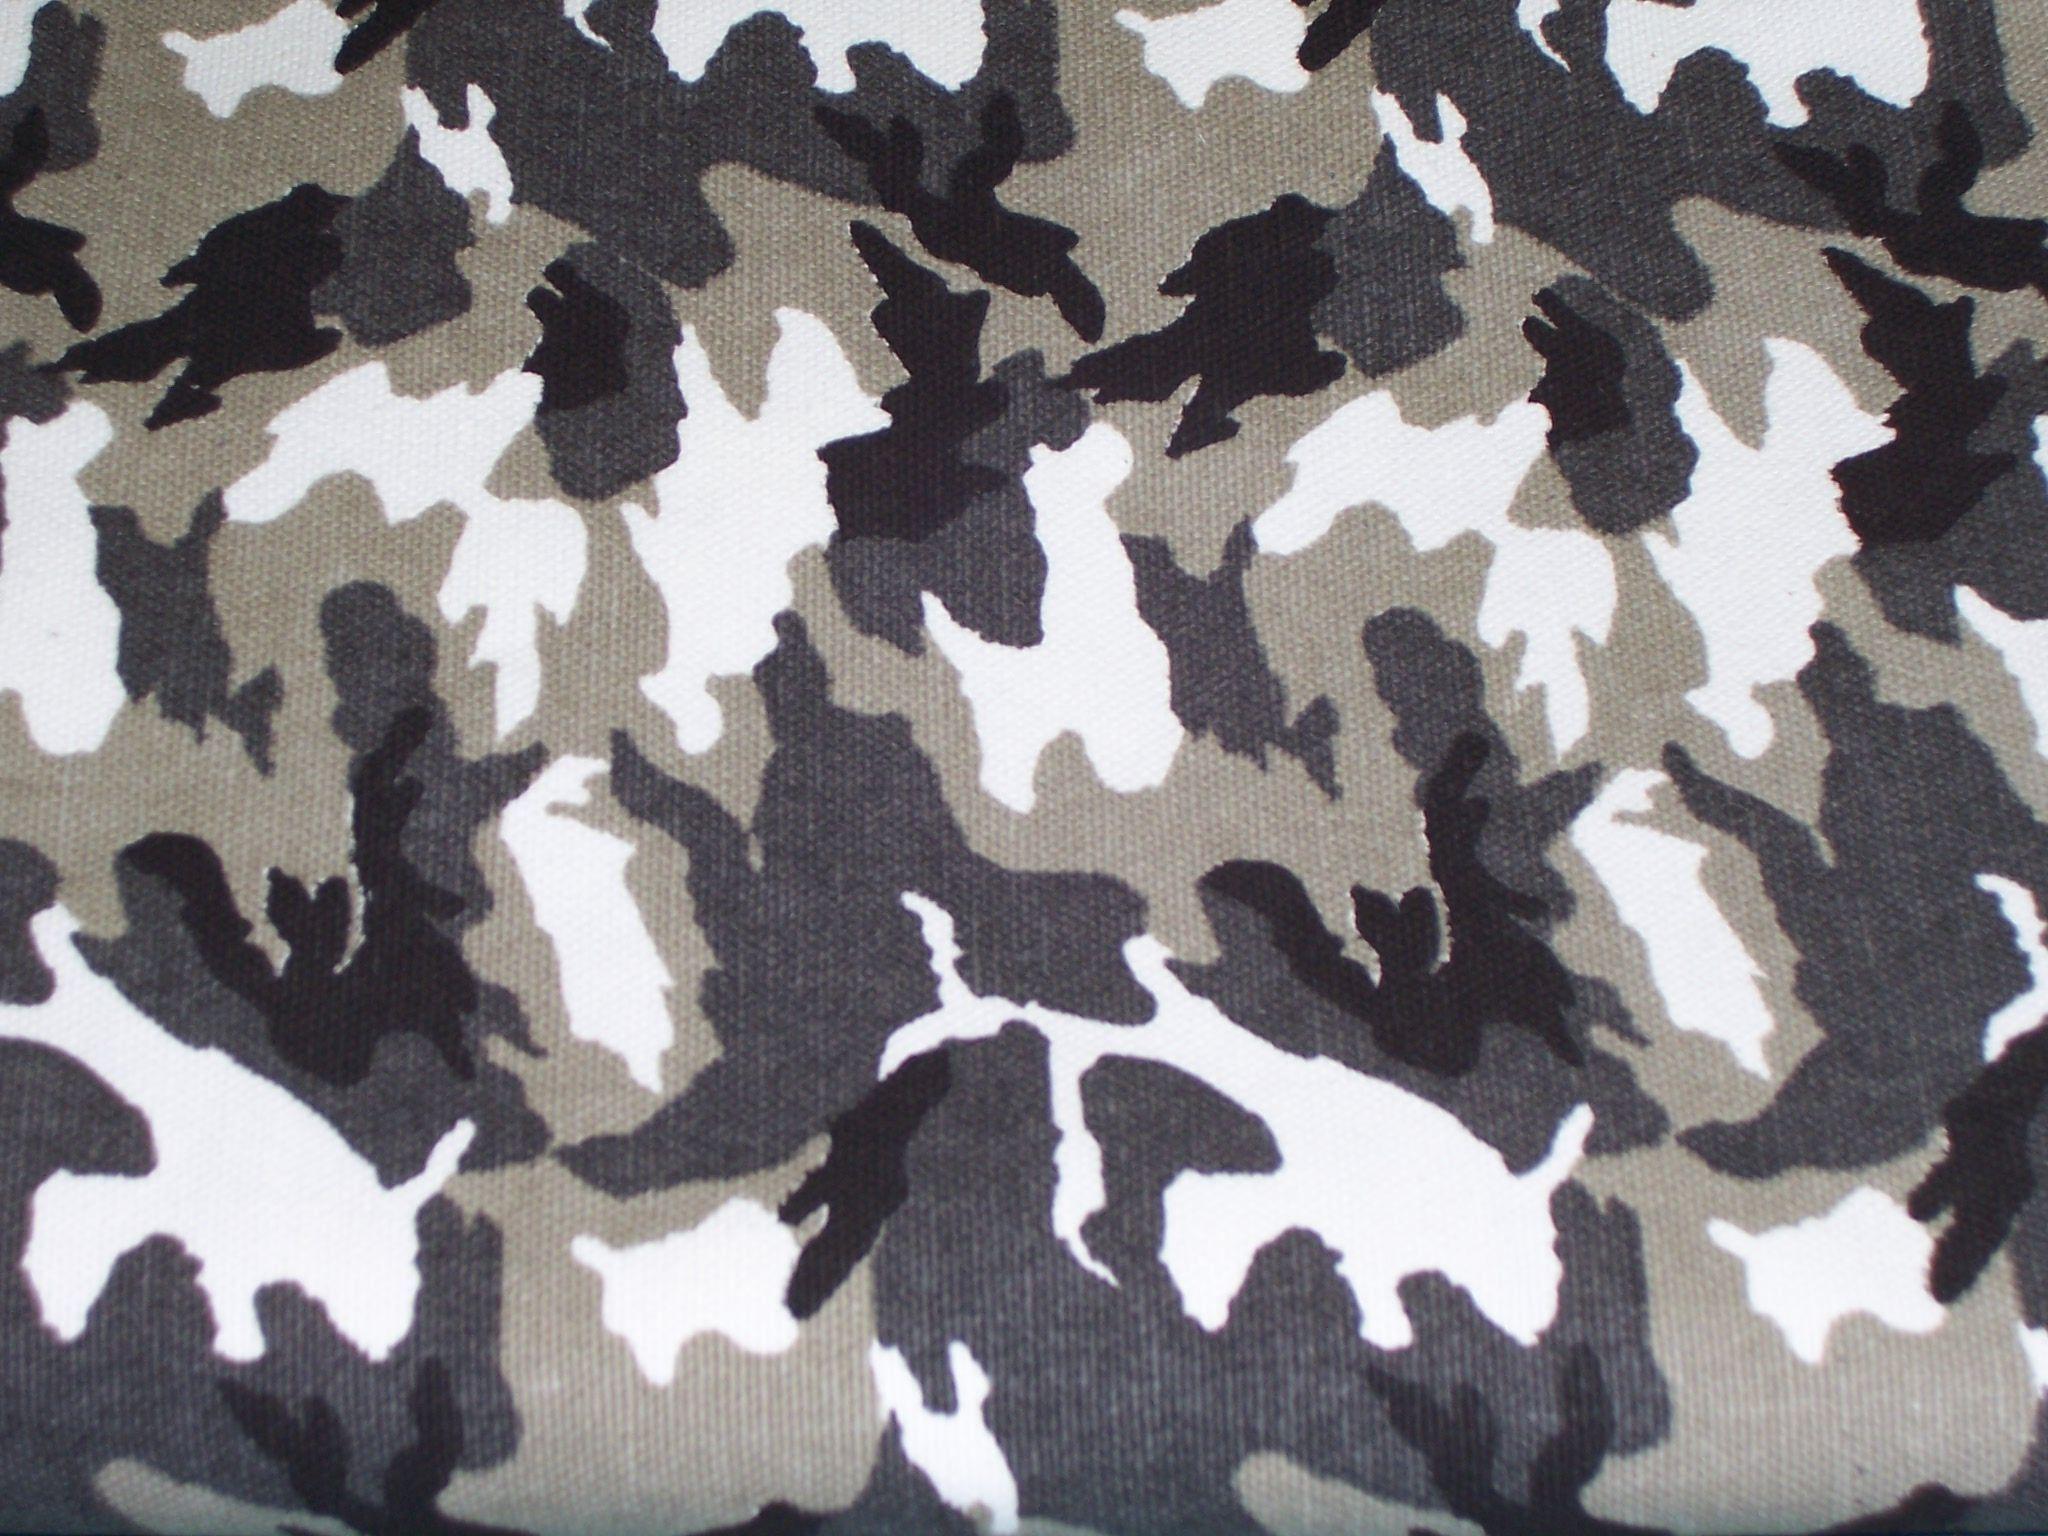 Combat camouflage pattern